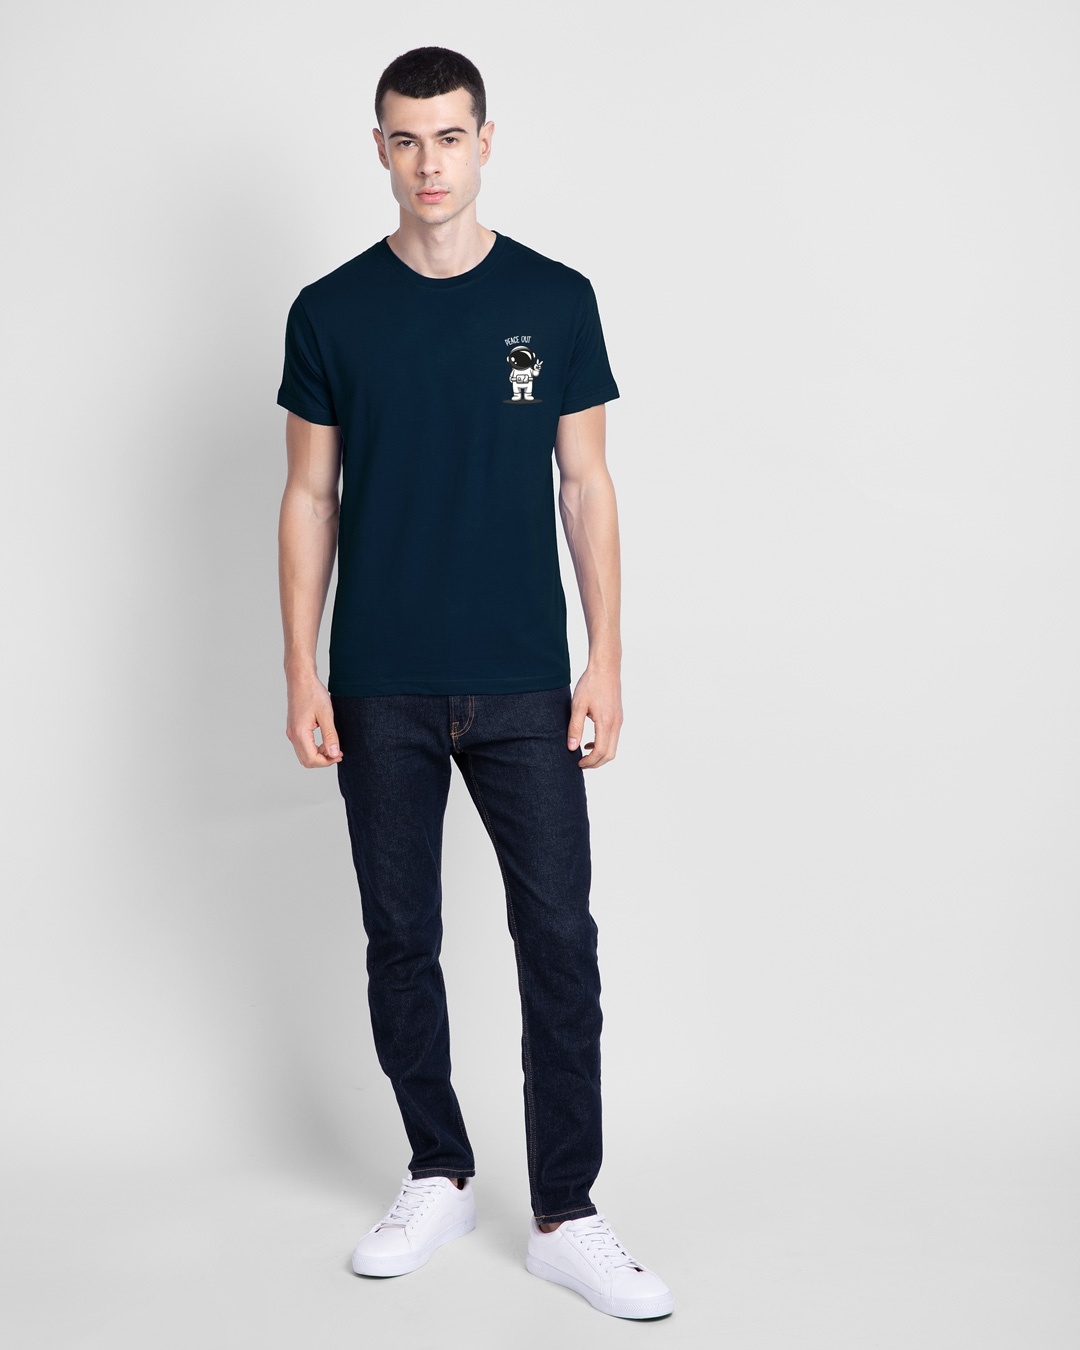 Shop Peace Out Astronaut Half Sleeve T-Shirt Navy Blue-Design